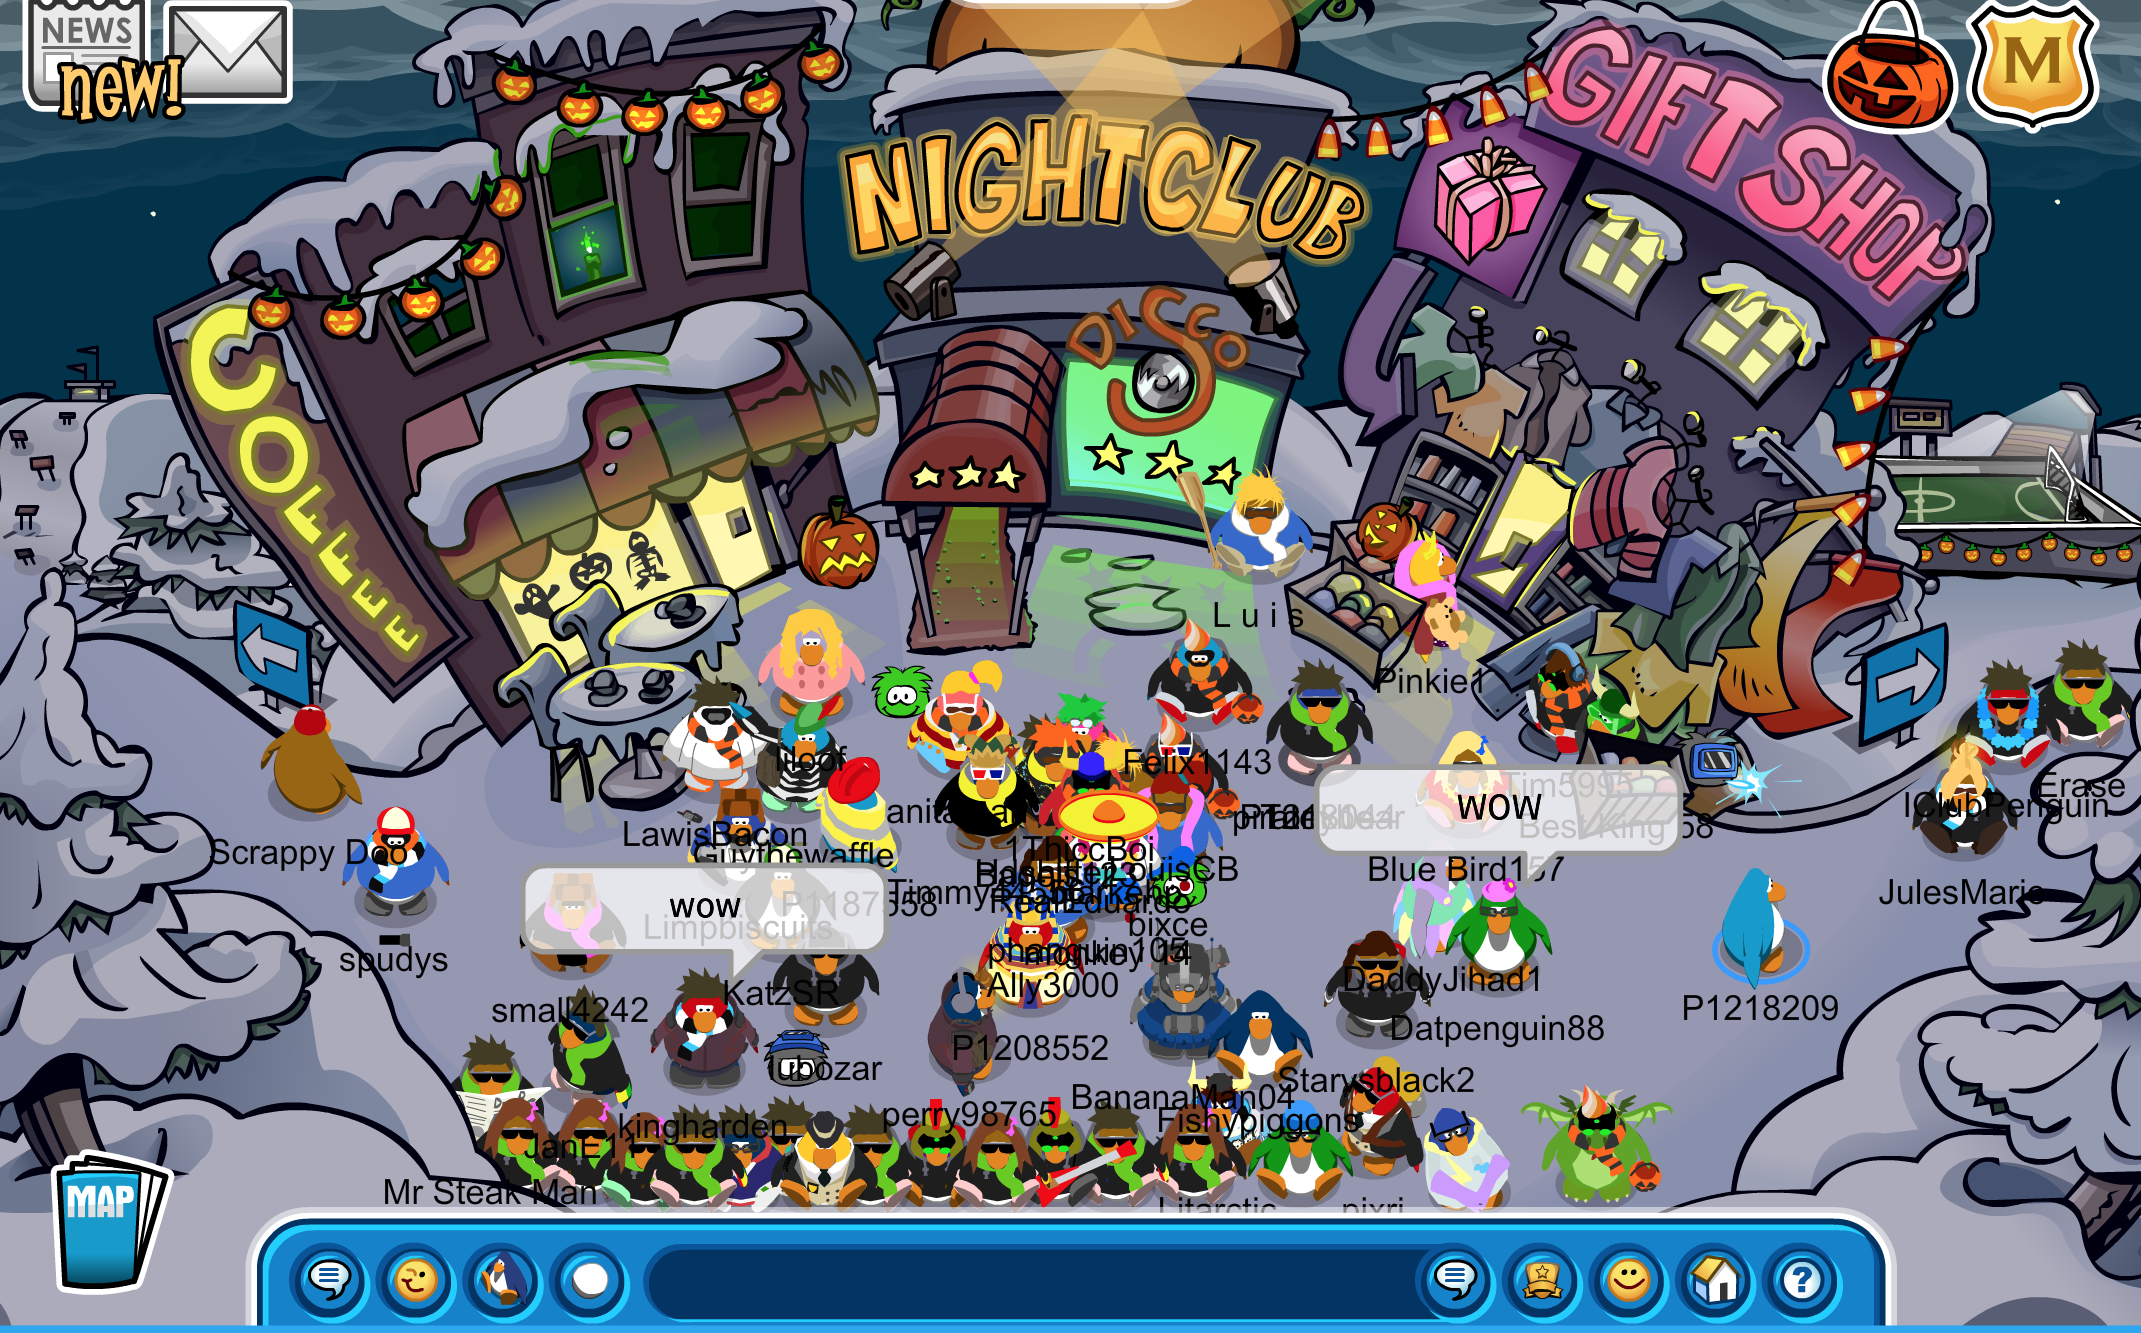 club penguin island game online